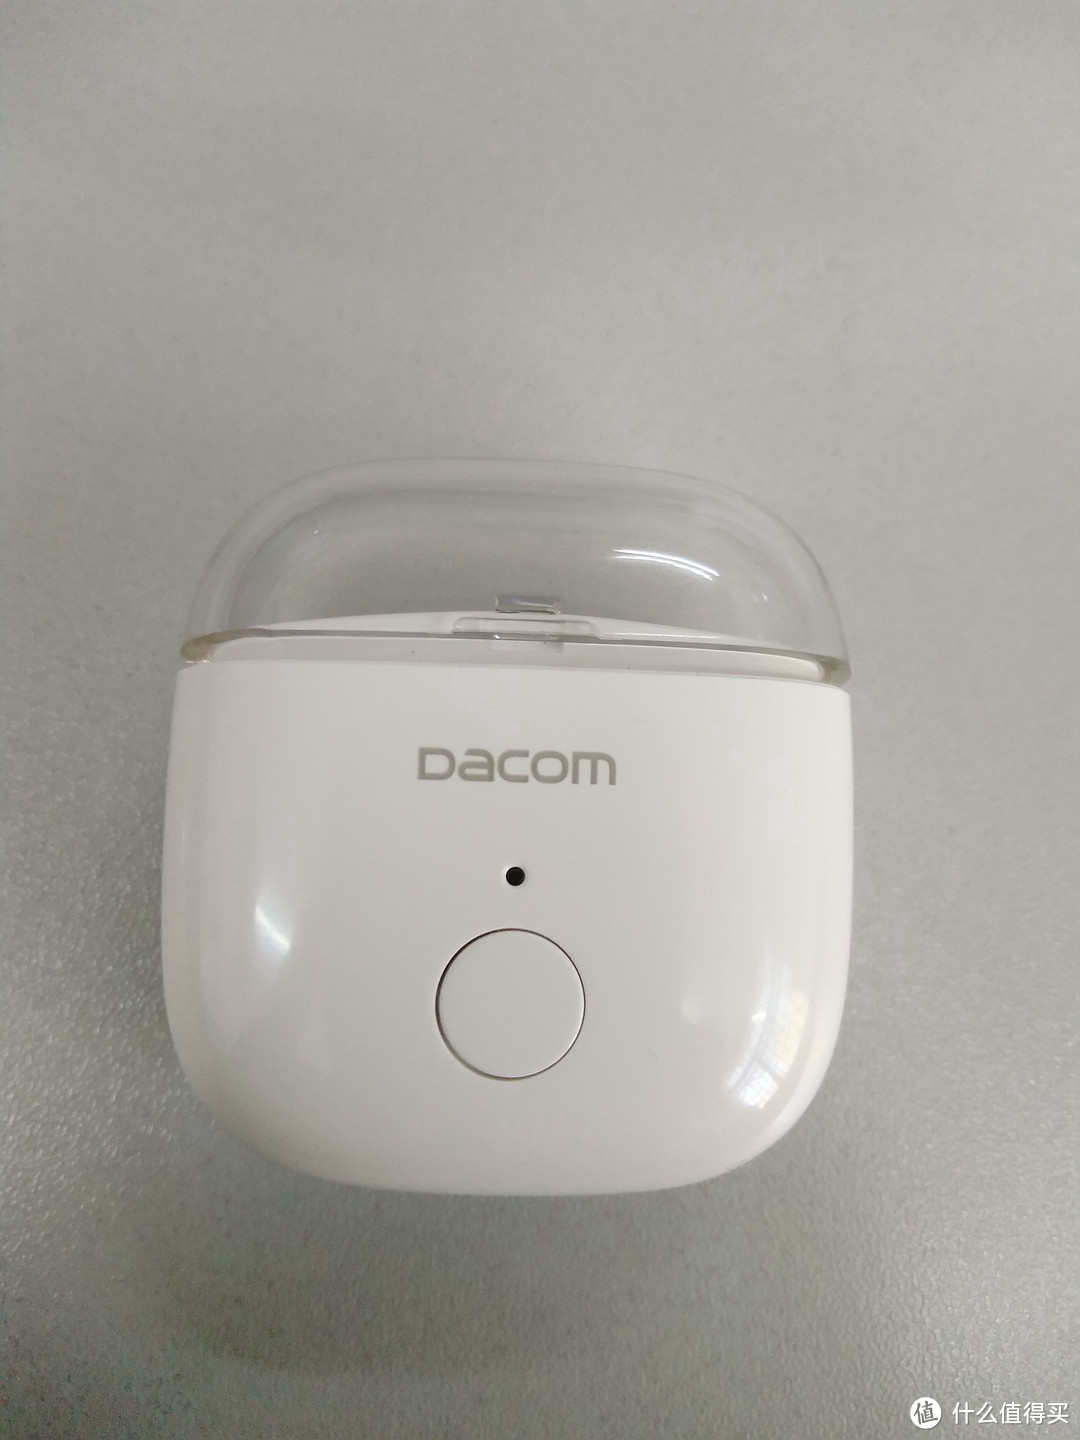 AirPods确实好，跟风产物遍地跑—dacom 大康 K6p 蓝牙耳机 开箱晒物